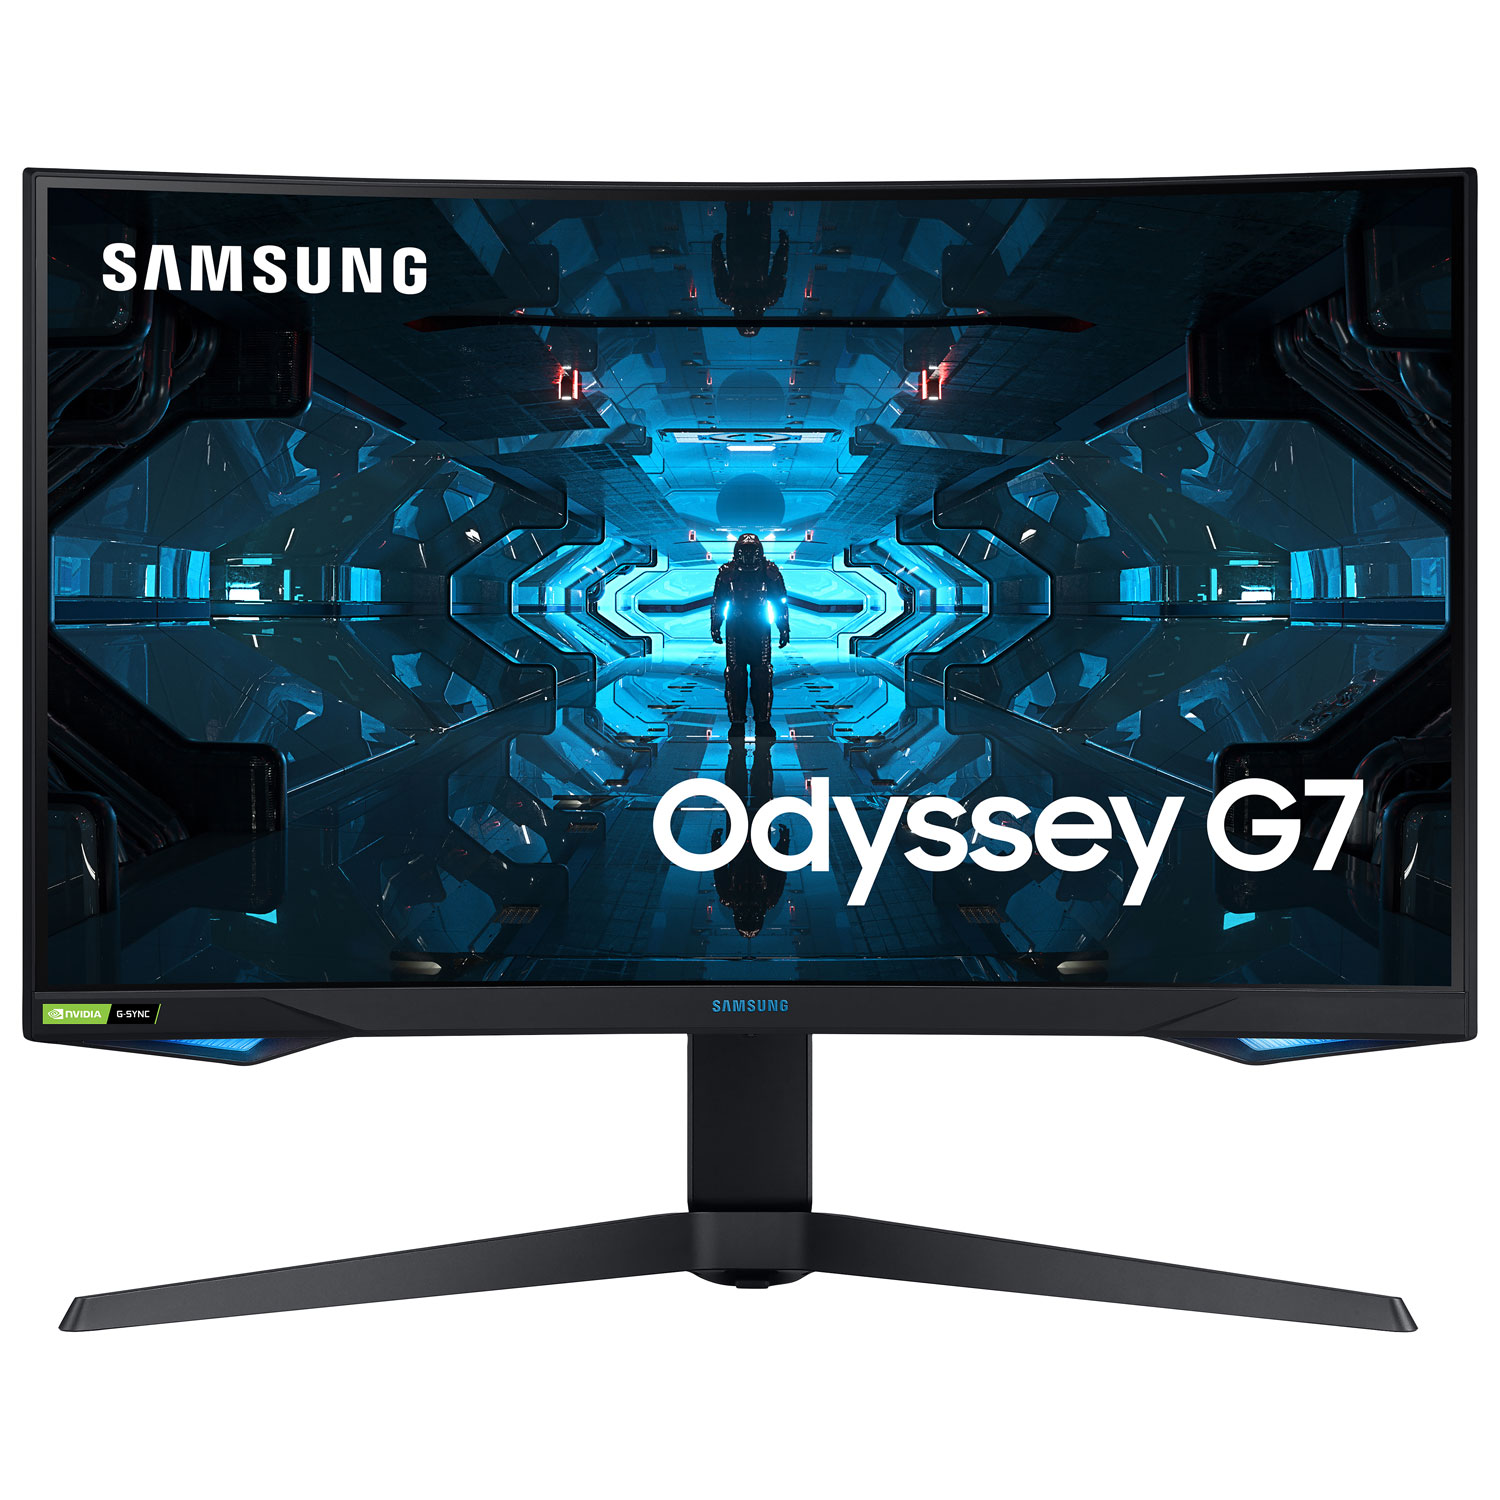 Samsung Odyssey G7 27" WQHD 240Hz 1ms GTG Curved VA LED G-Sync Gaming Monitor (LC27G75TQSNXZA) - Black